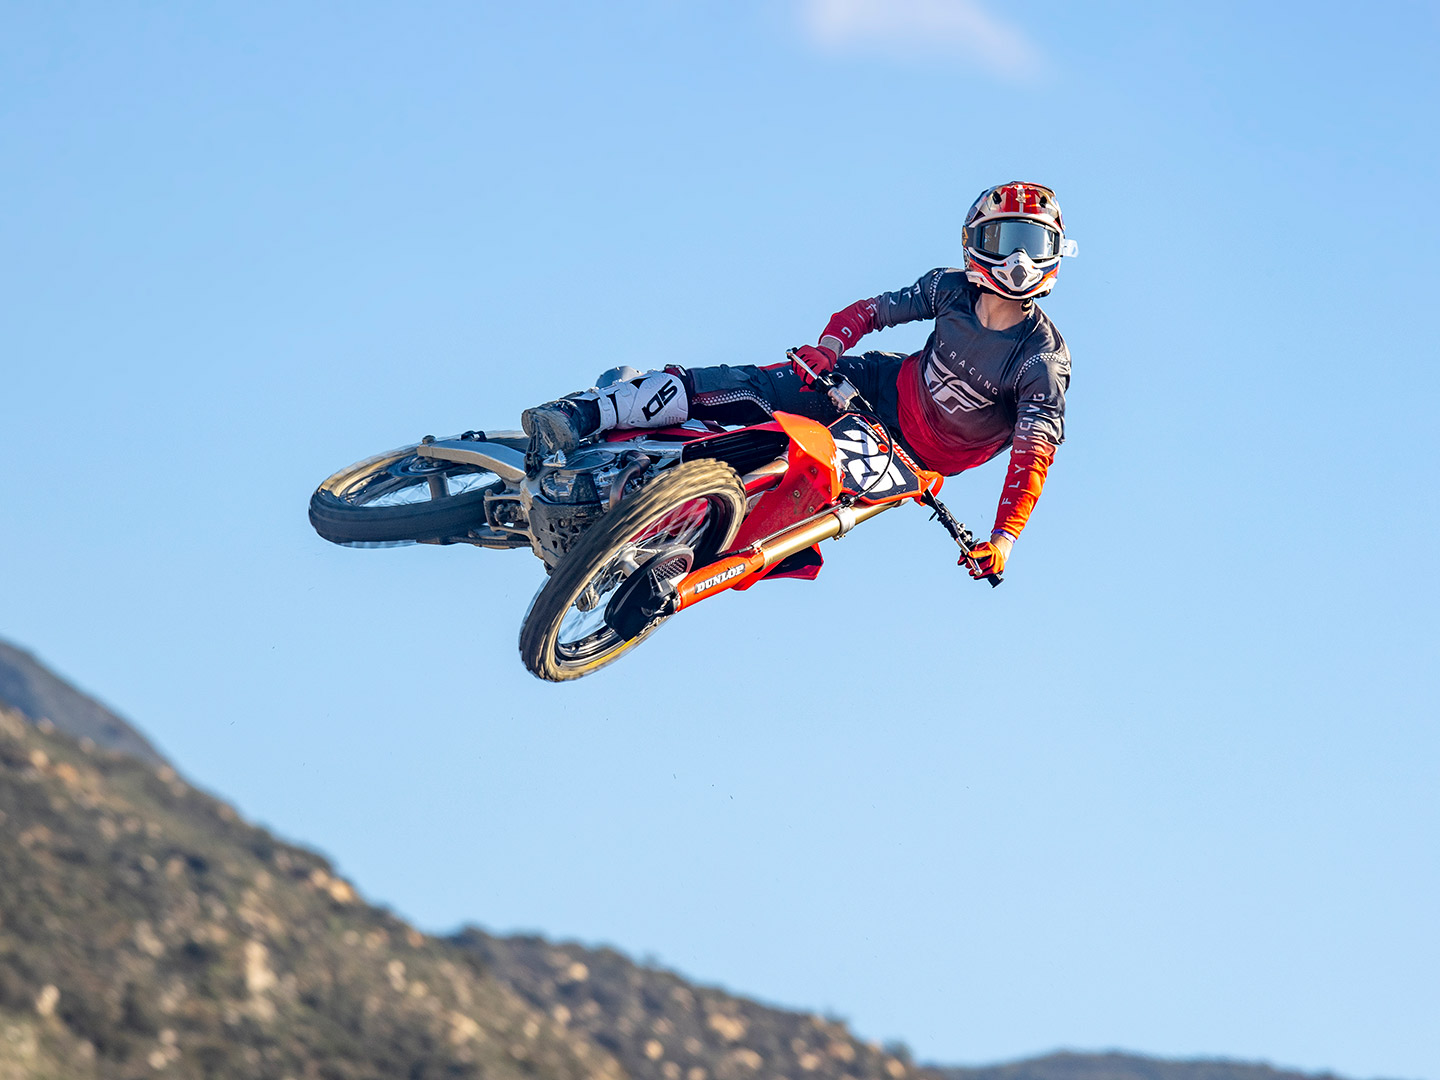 Best Motocross Bike 6th Place—2023 Honda CRF250R